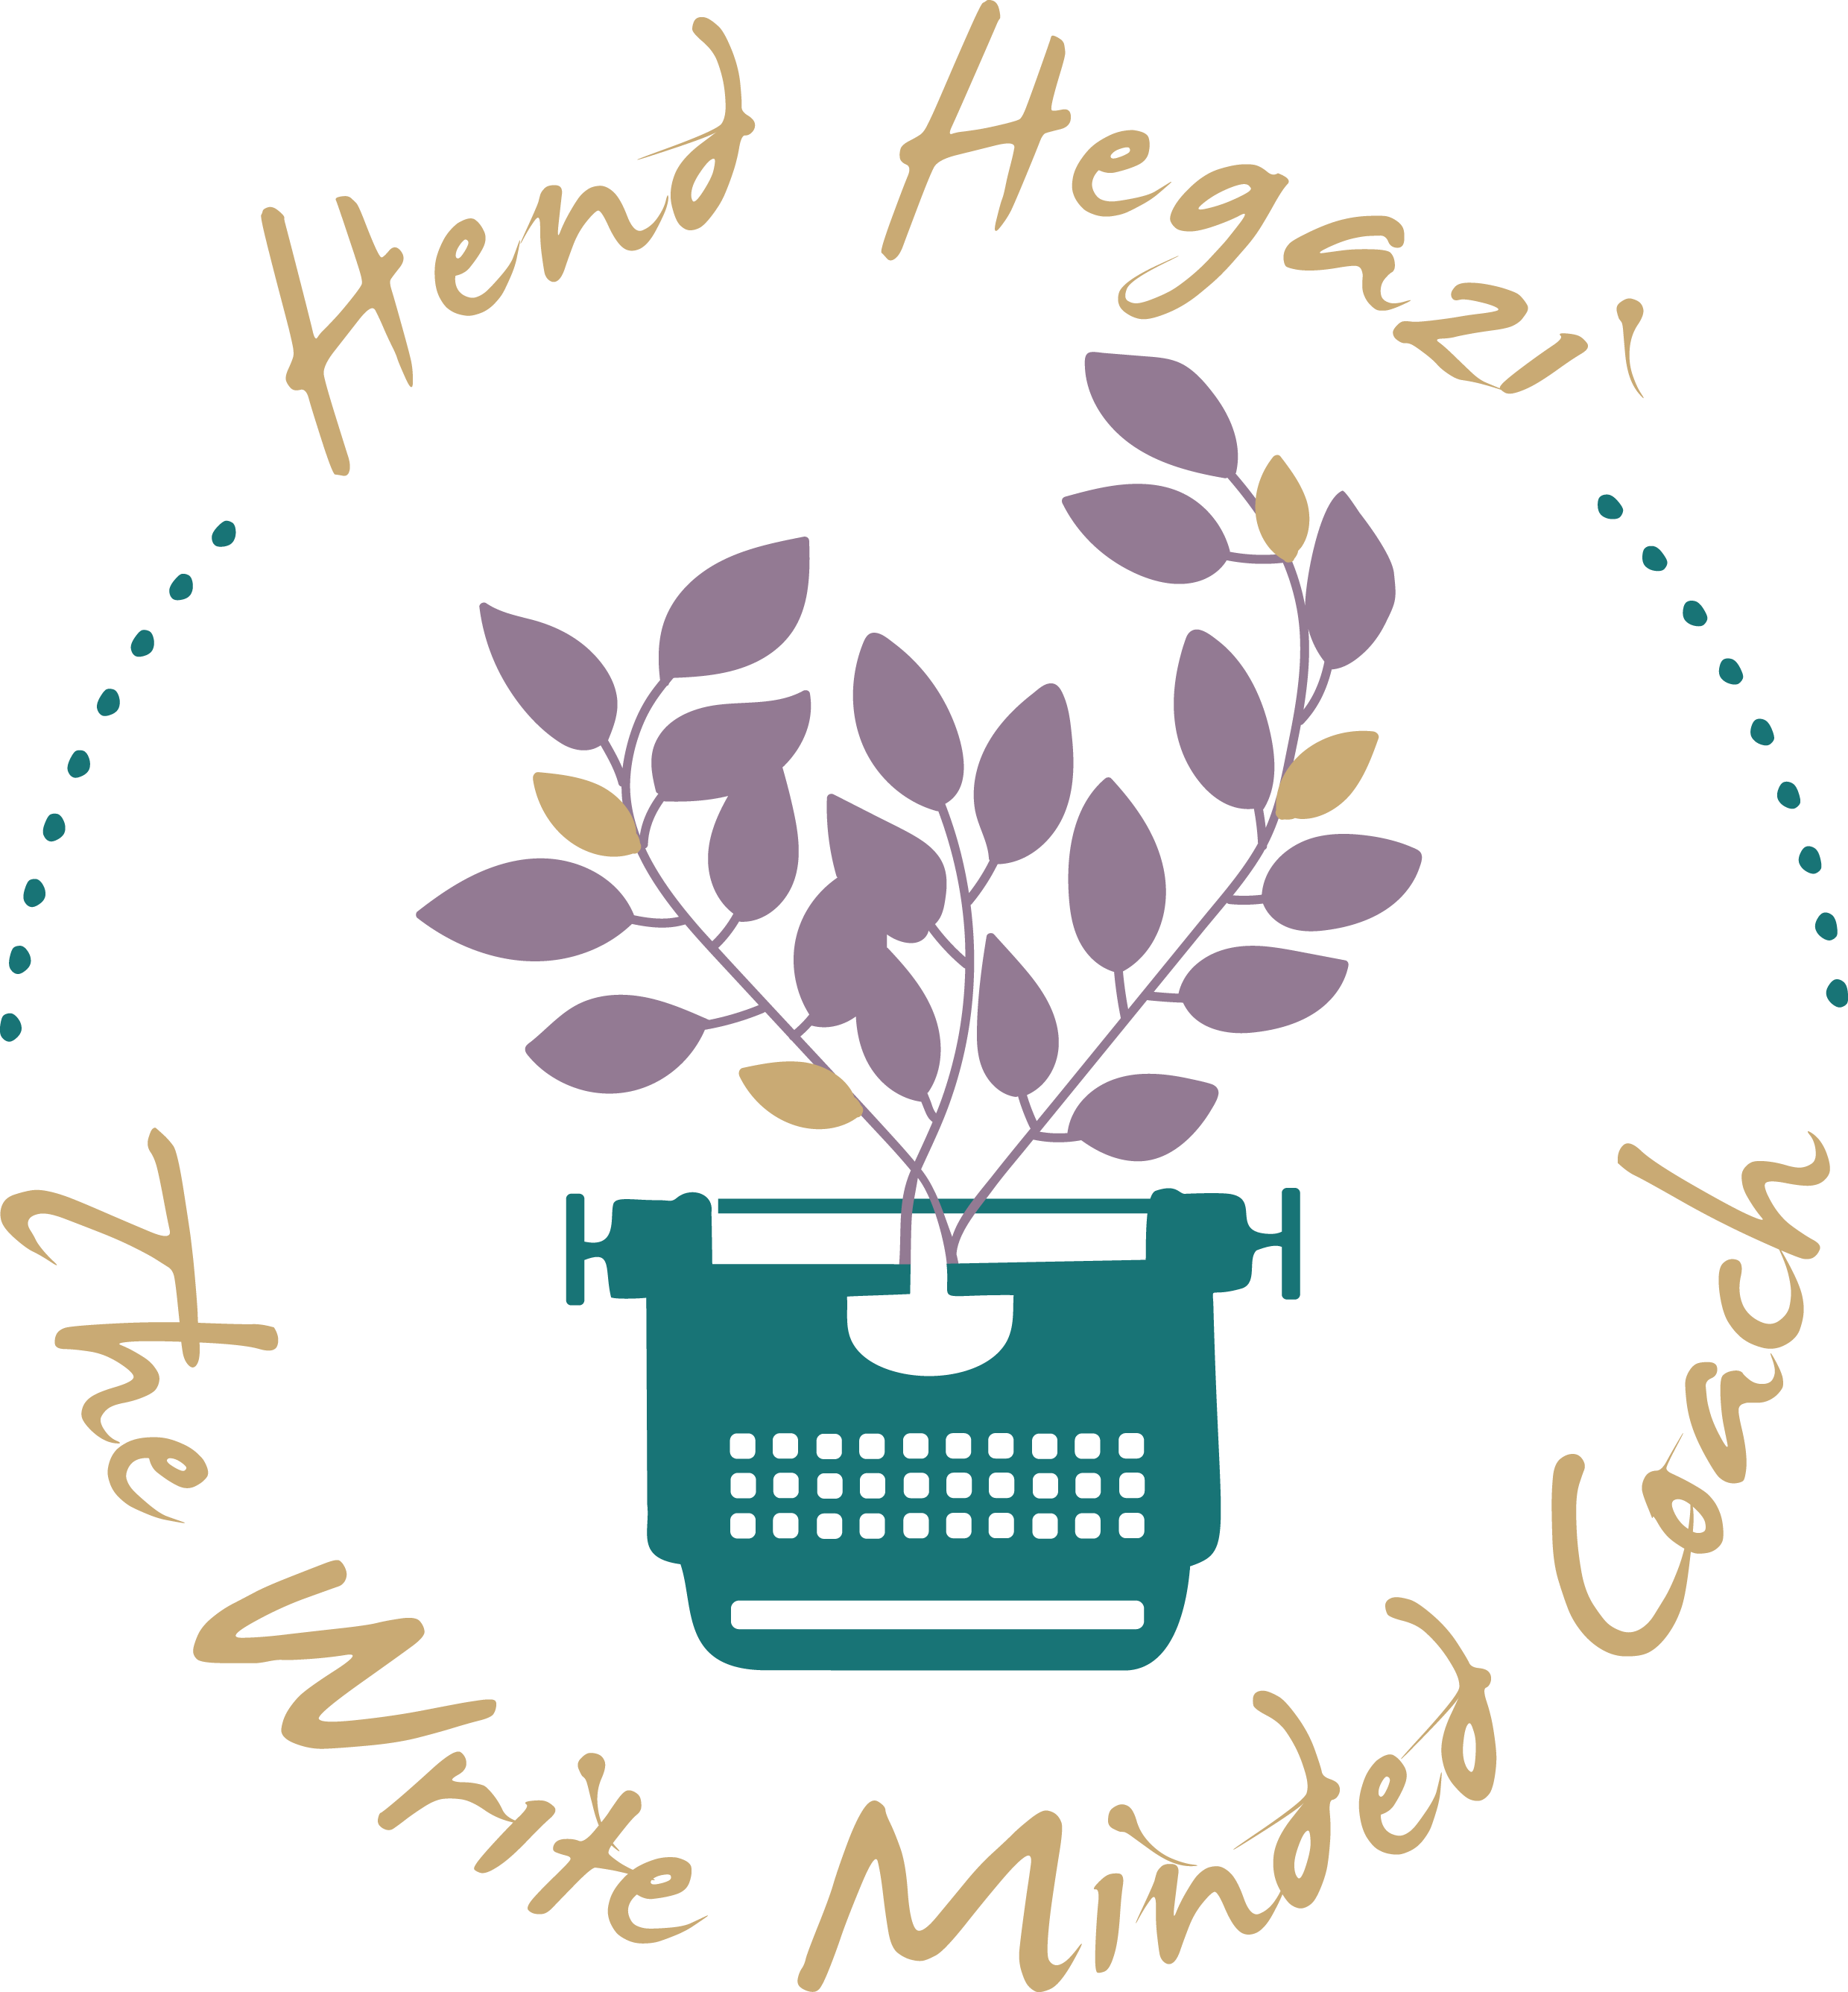 Hend Hegazi